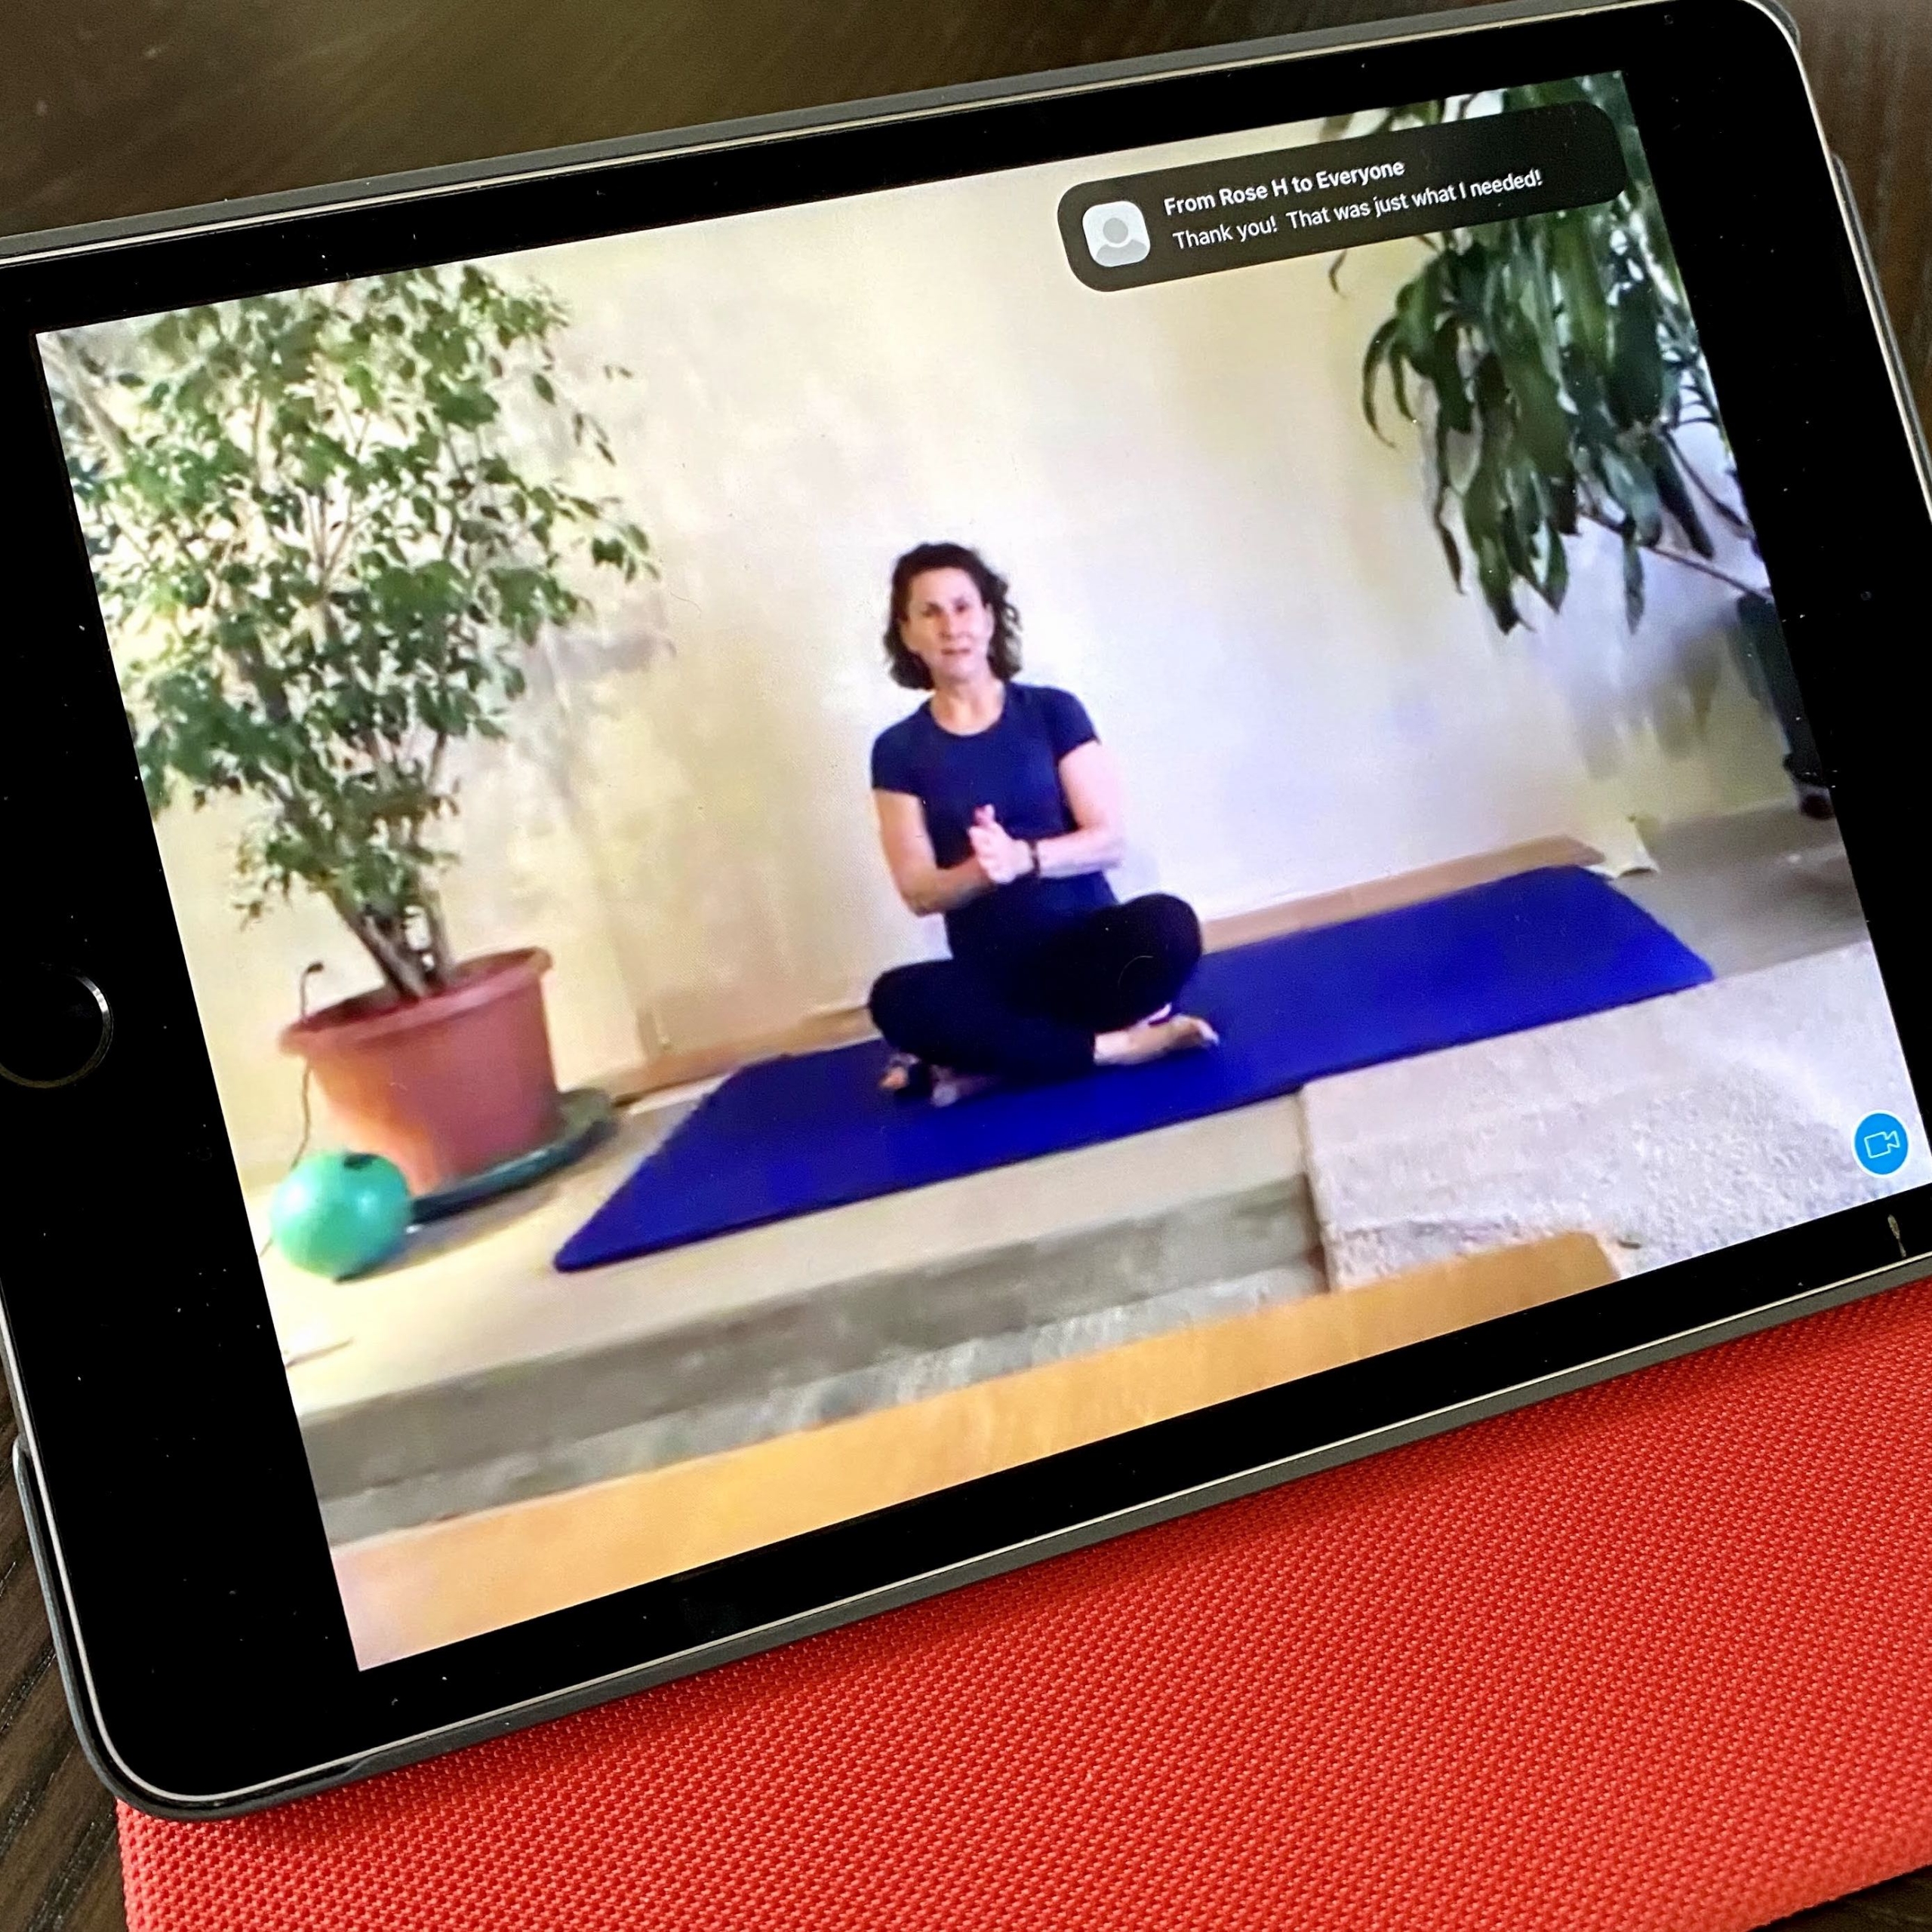 Pilates Instructor on Mat seen on iPad screen